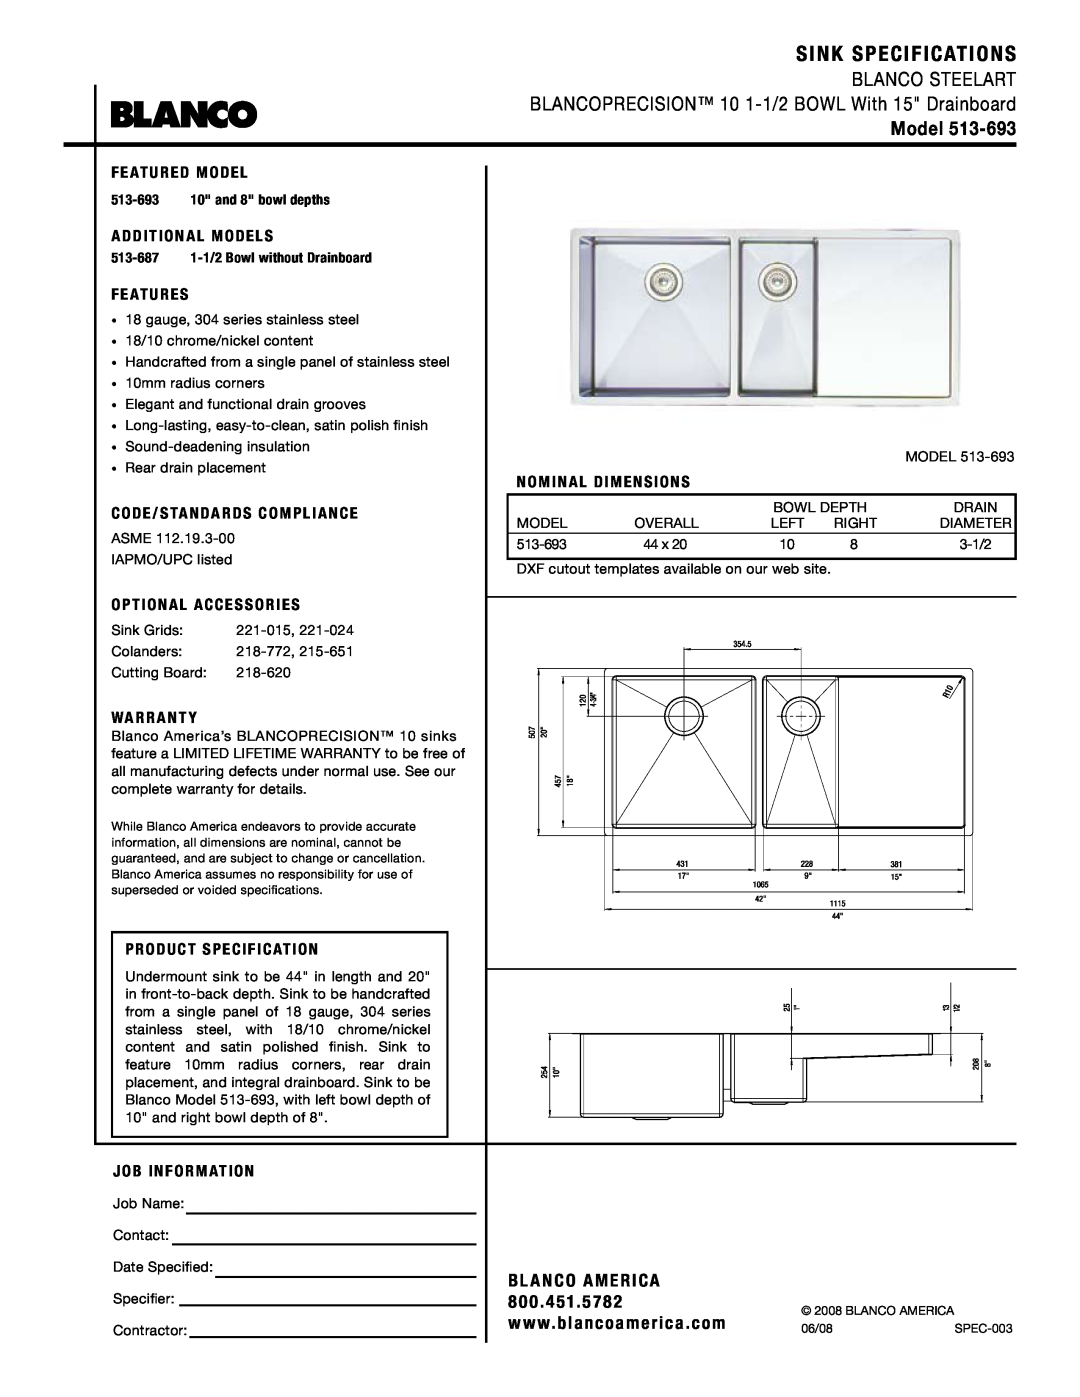 Blanco 513-693 warranty Sink Specifications, Blanco Steelart, BLANCOPRECISION 10 1-1/2BOWL With 15 Drainboard, Model 